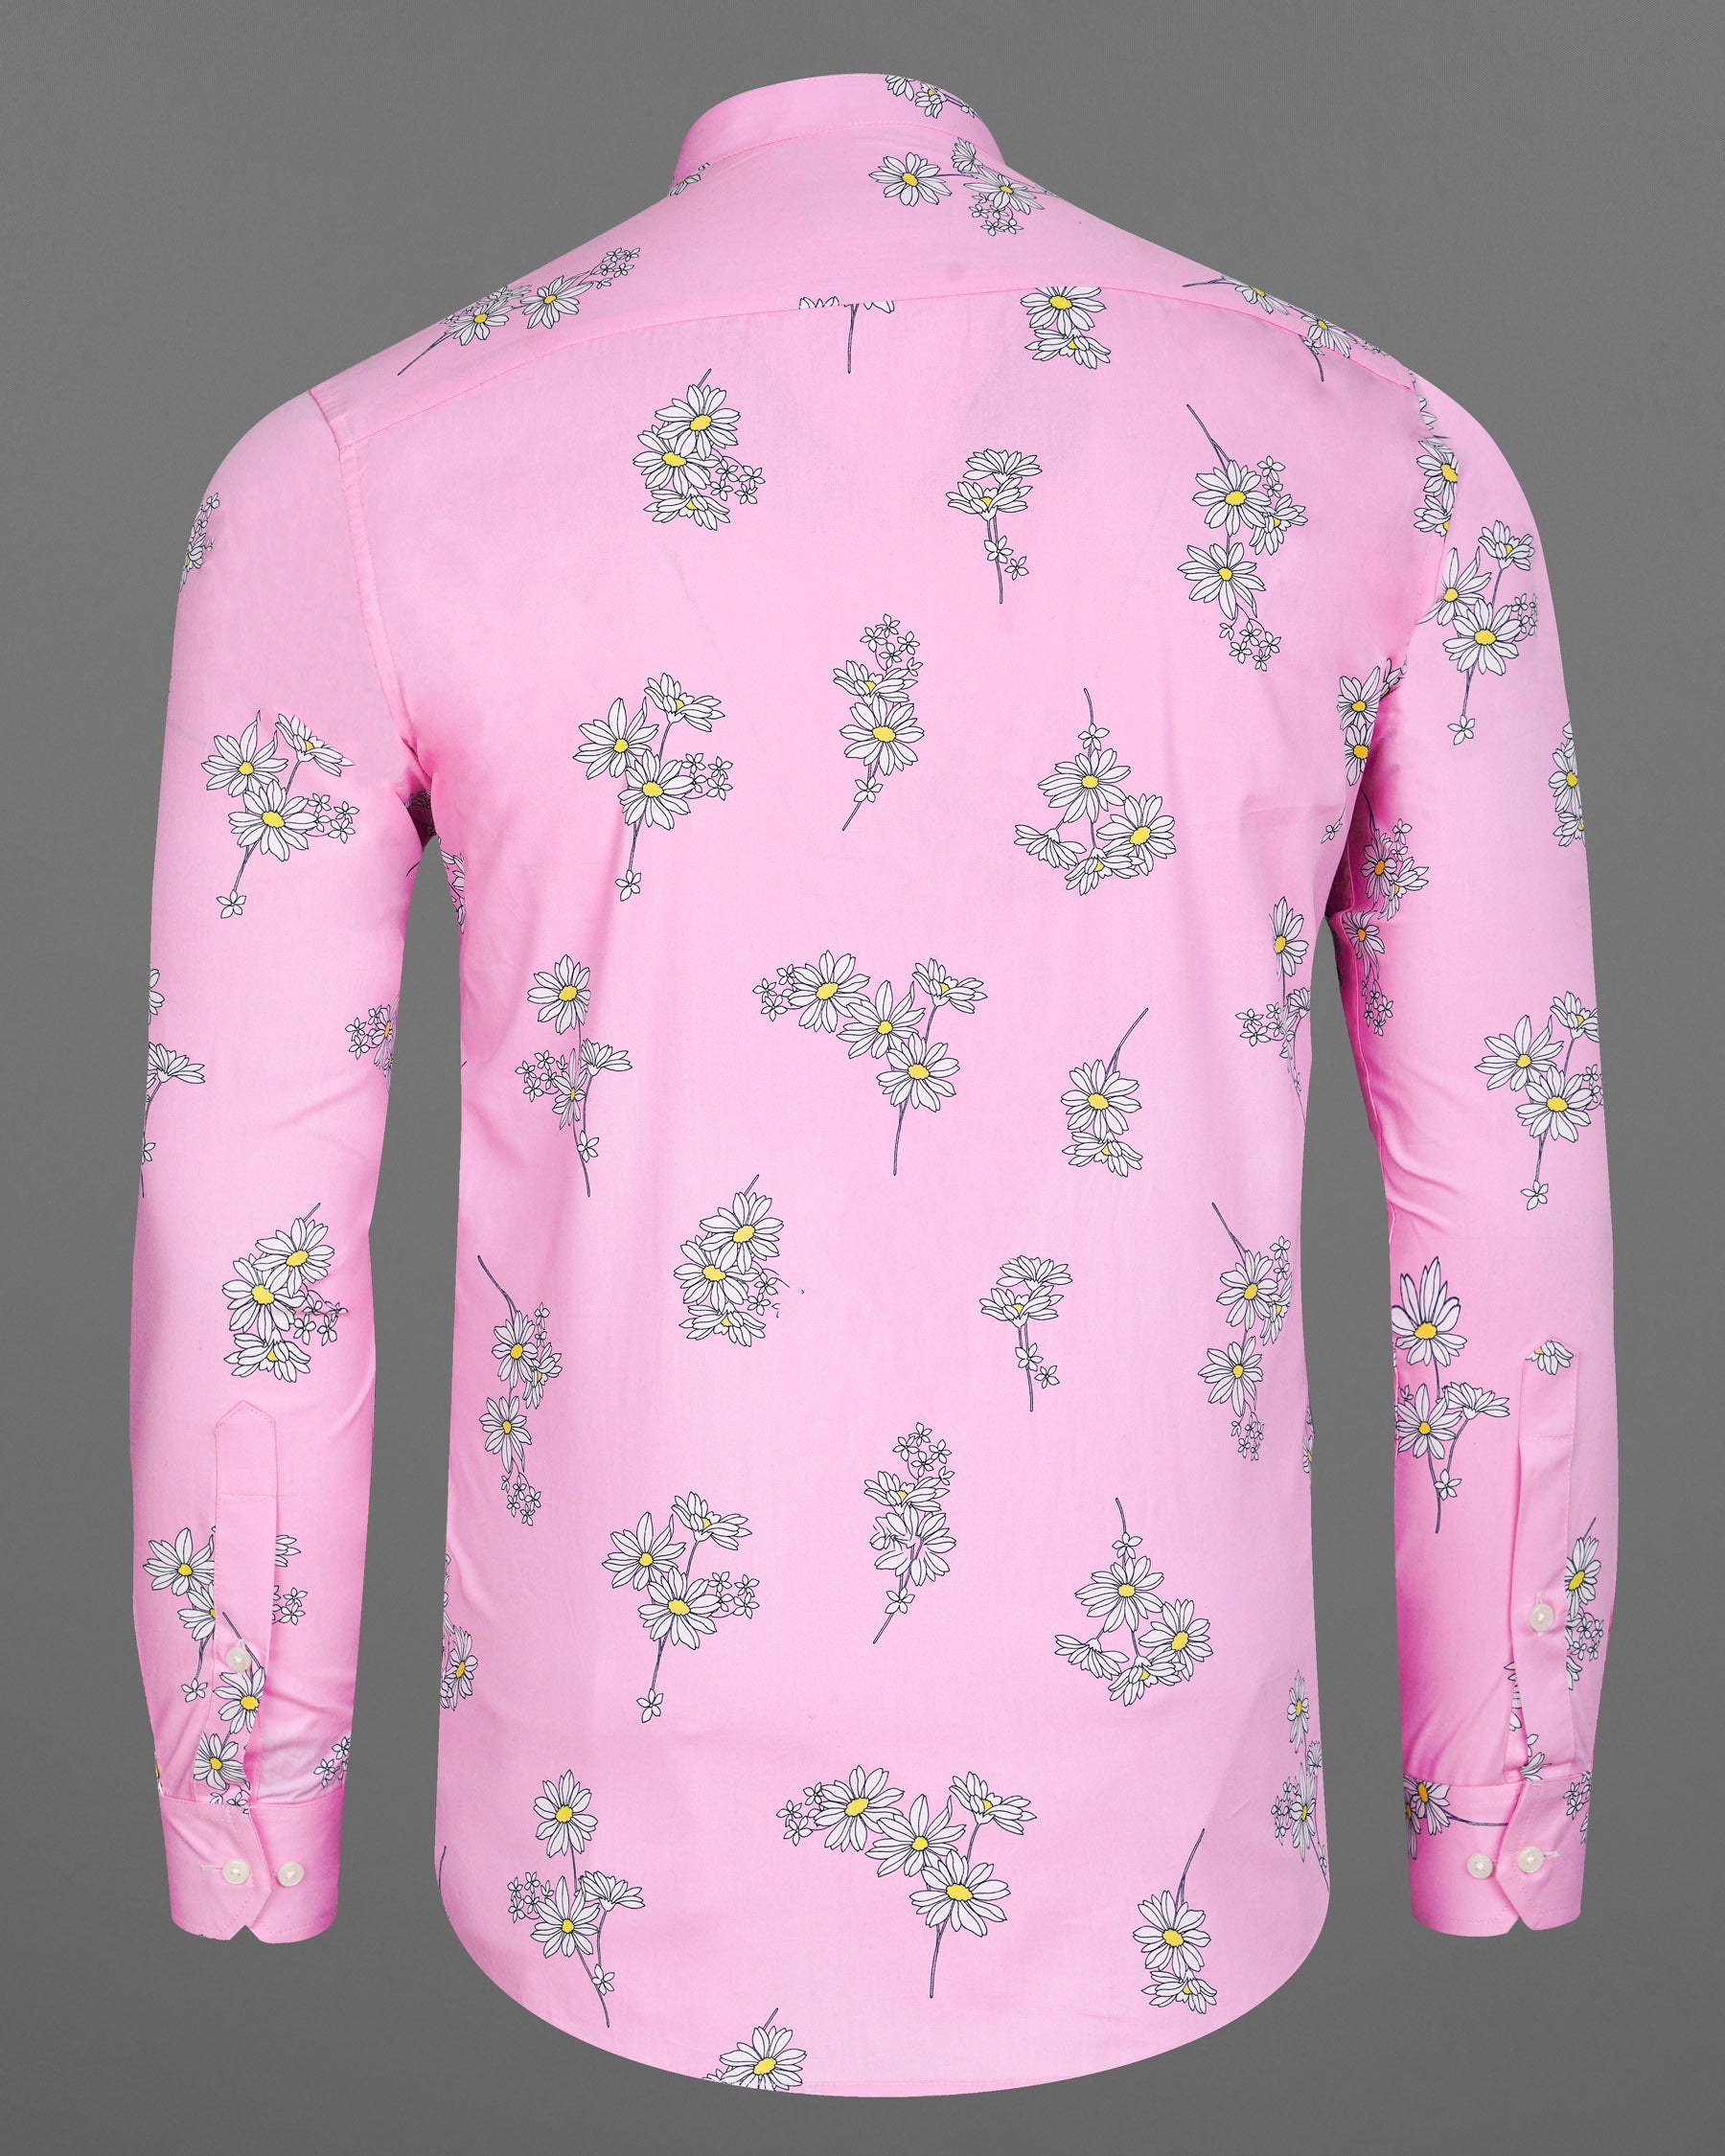 Chantilly Pink Floral Printed Premium Cotton Shirt 7807-M-38, 7807-M-H-38, 7807-M-39, 7807-M-H-39, 7807-M-40, 7807-M-H-40, 7807-M-42, 7807-M-H-42, 7807-M-44, 7807-M-H-44, 7807-M-46, 7807-M-H-46, 7807-M-48, 7807-M-H-48, 7807-M-50, 7807-M-H-50, 7807-M-52, 7807-M-H-52